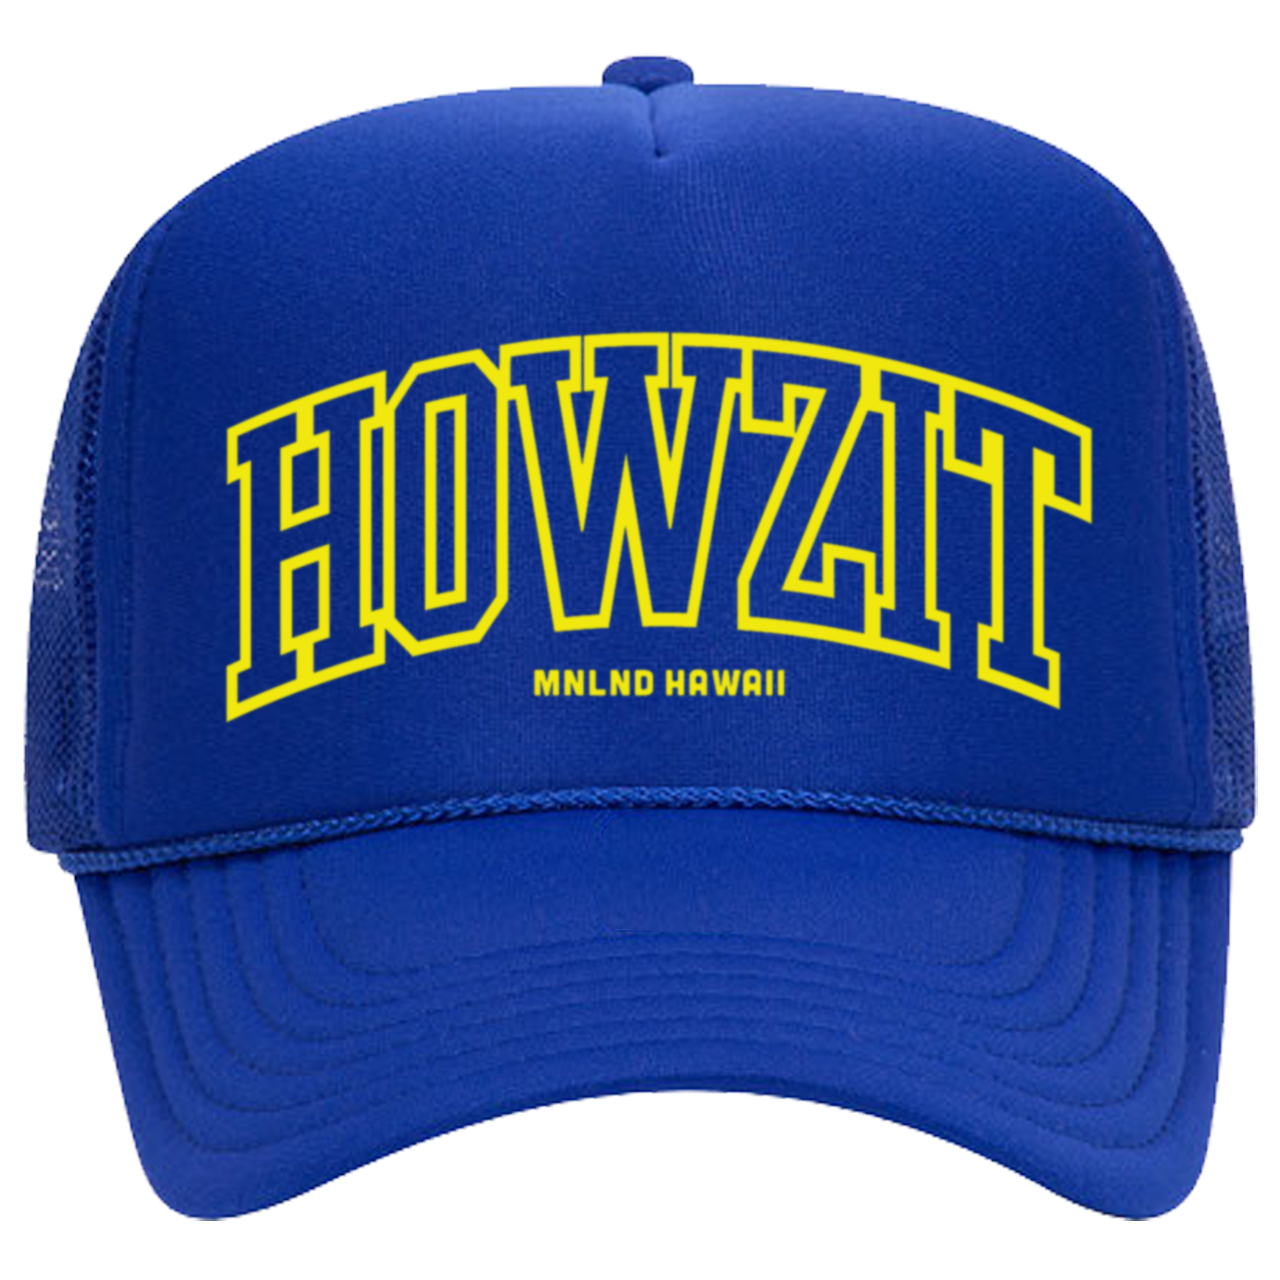 Howzit - Youth Trucker Hat